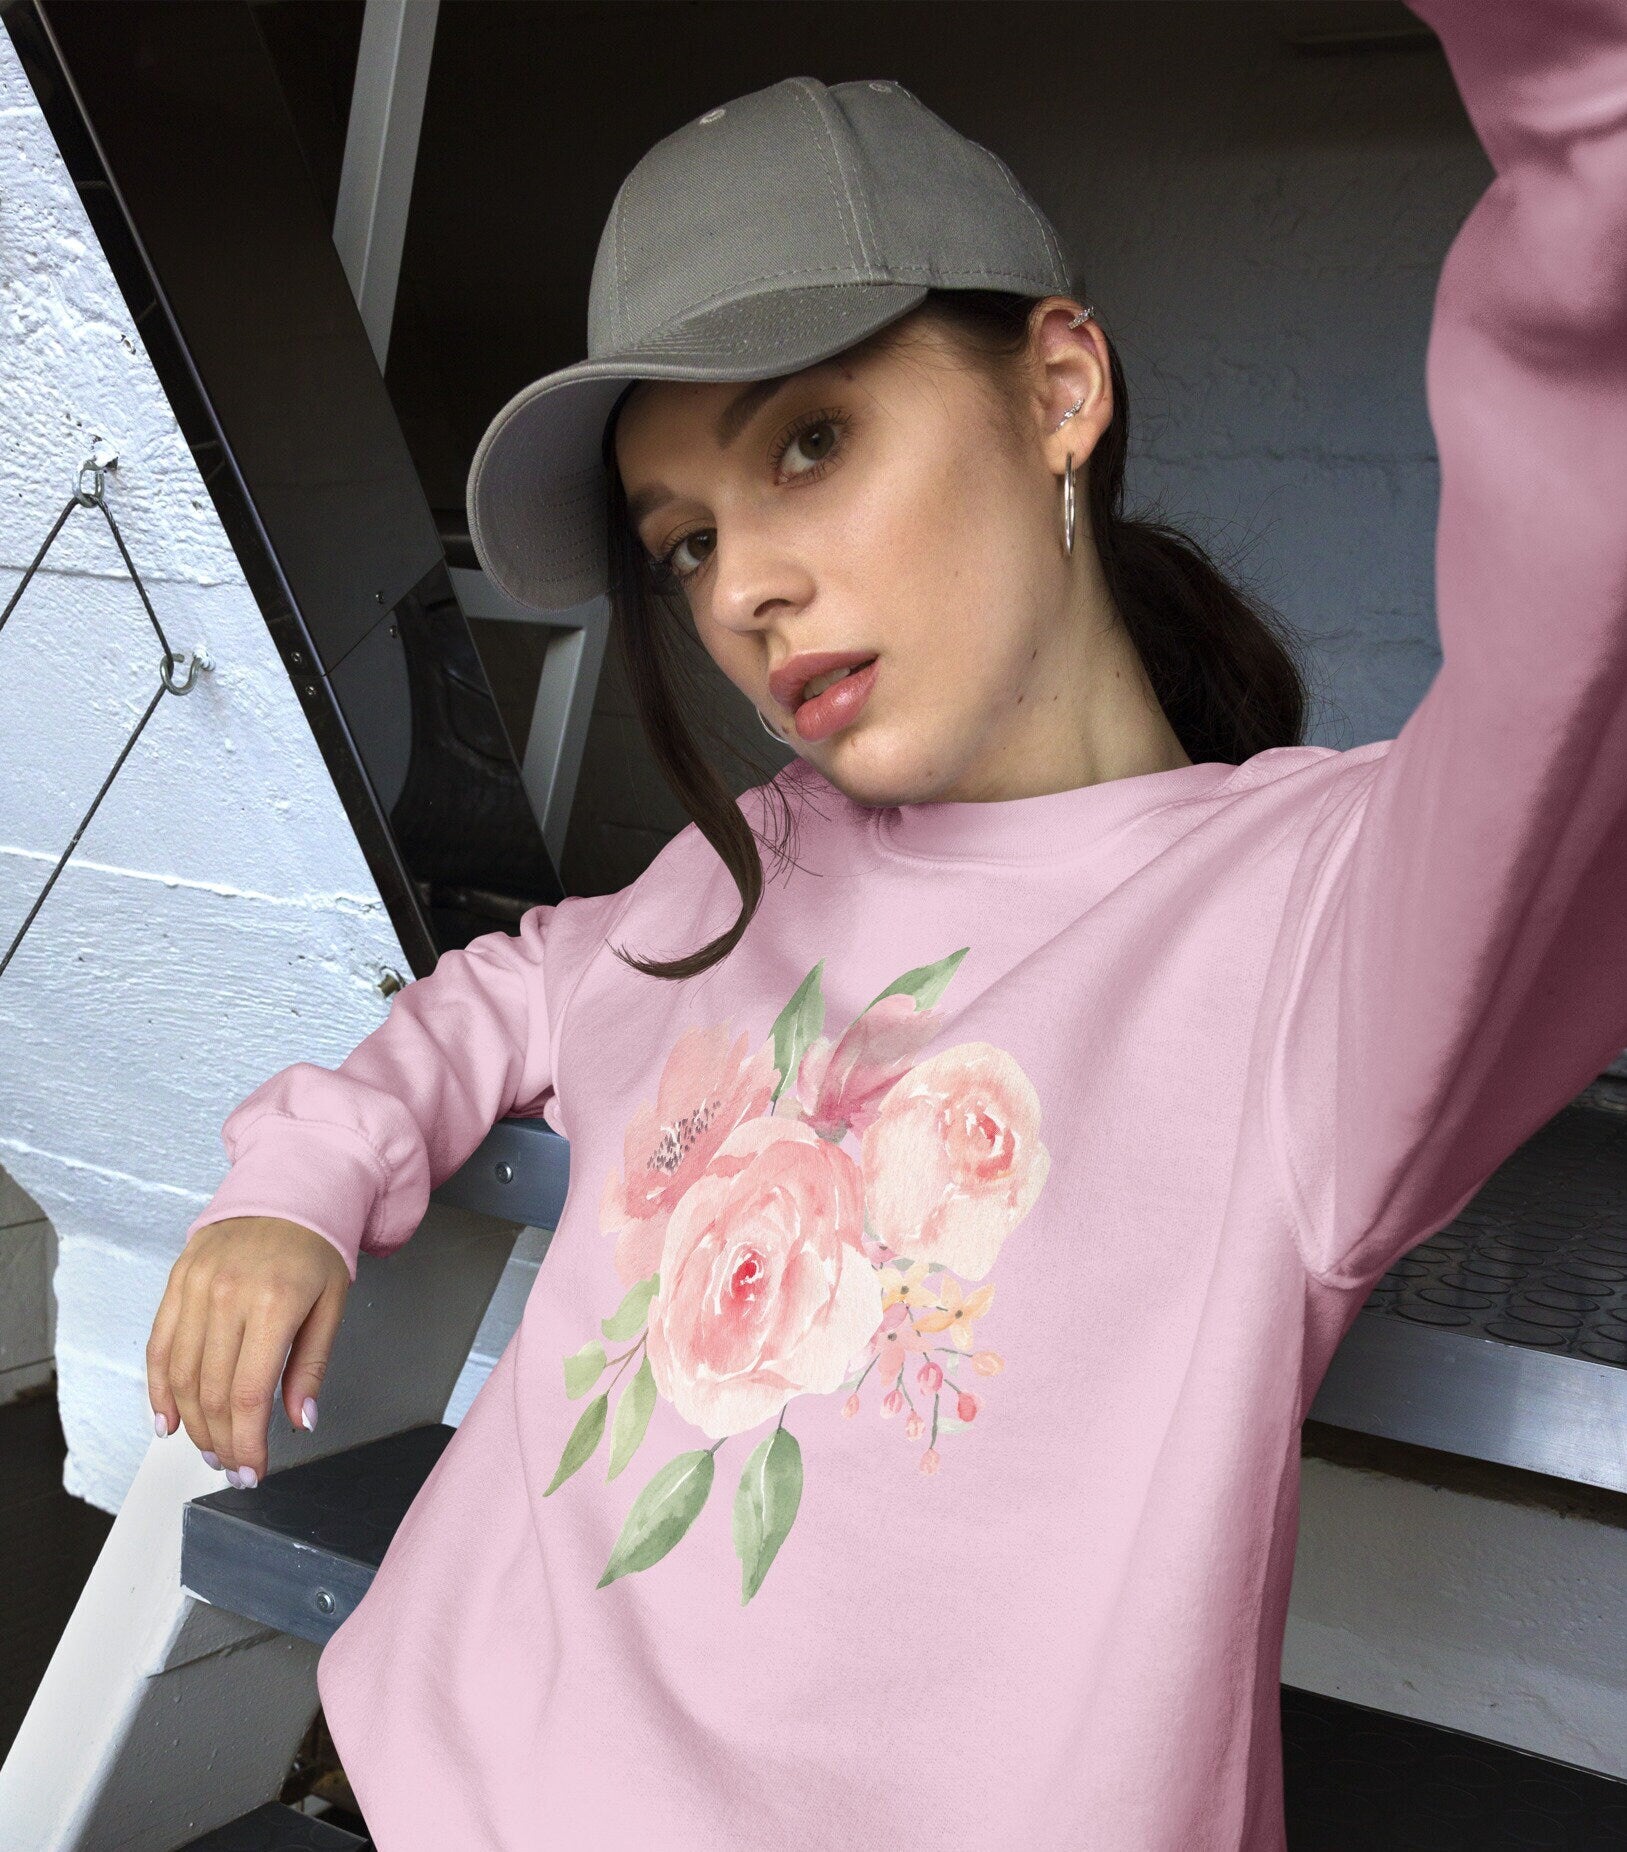 Pink Roses Sweater, Floral Sweatshirt, Nature Lover Sweatshirt